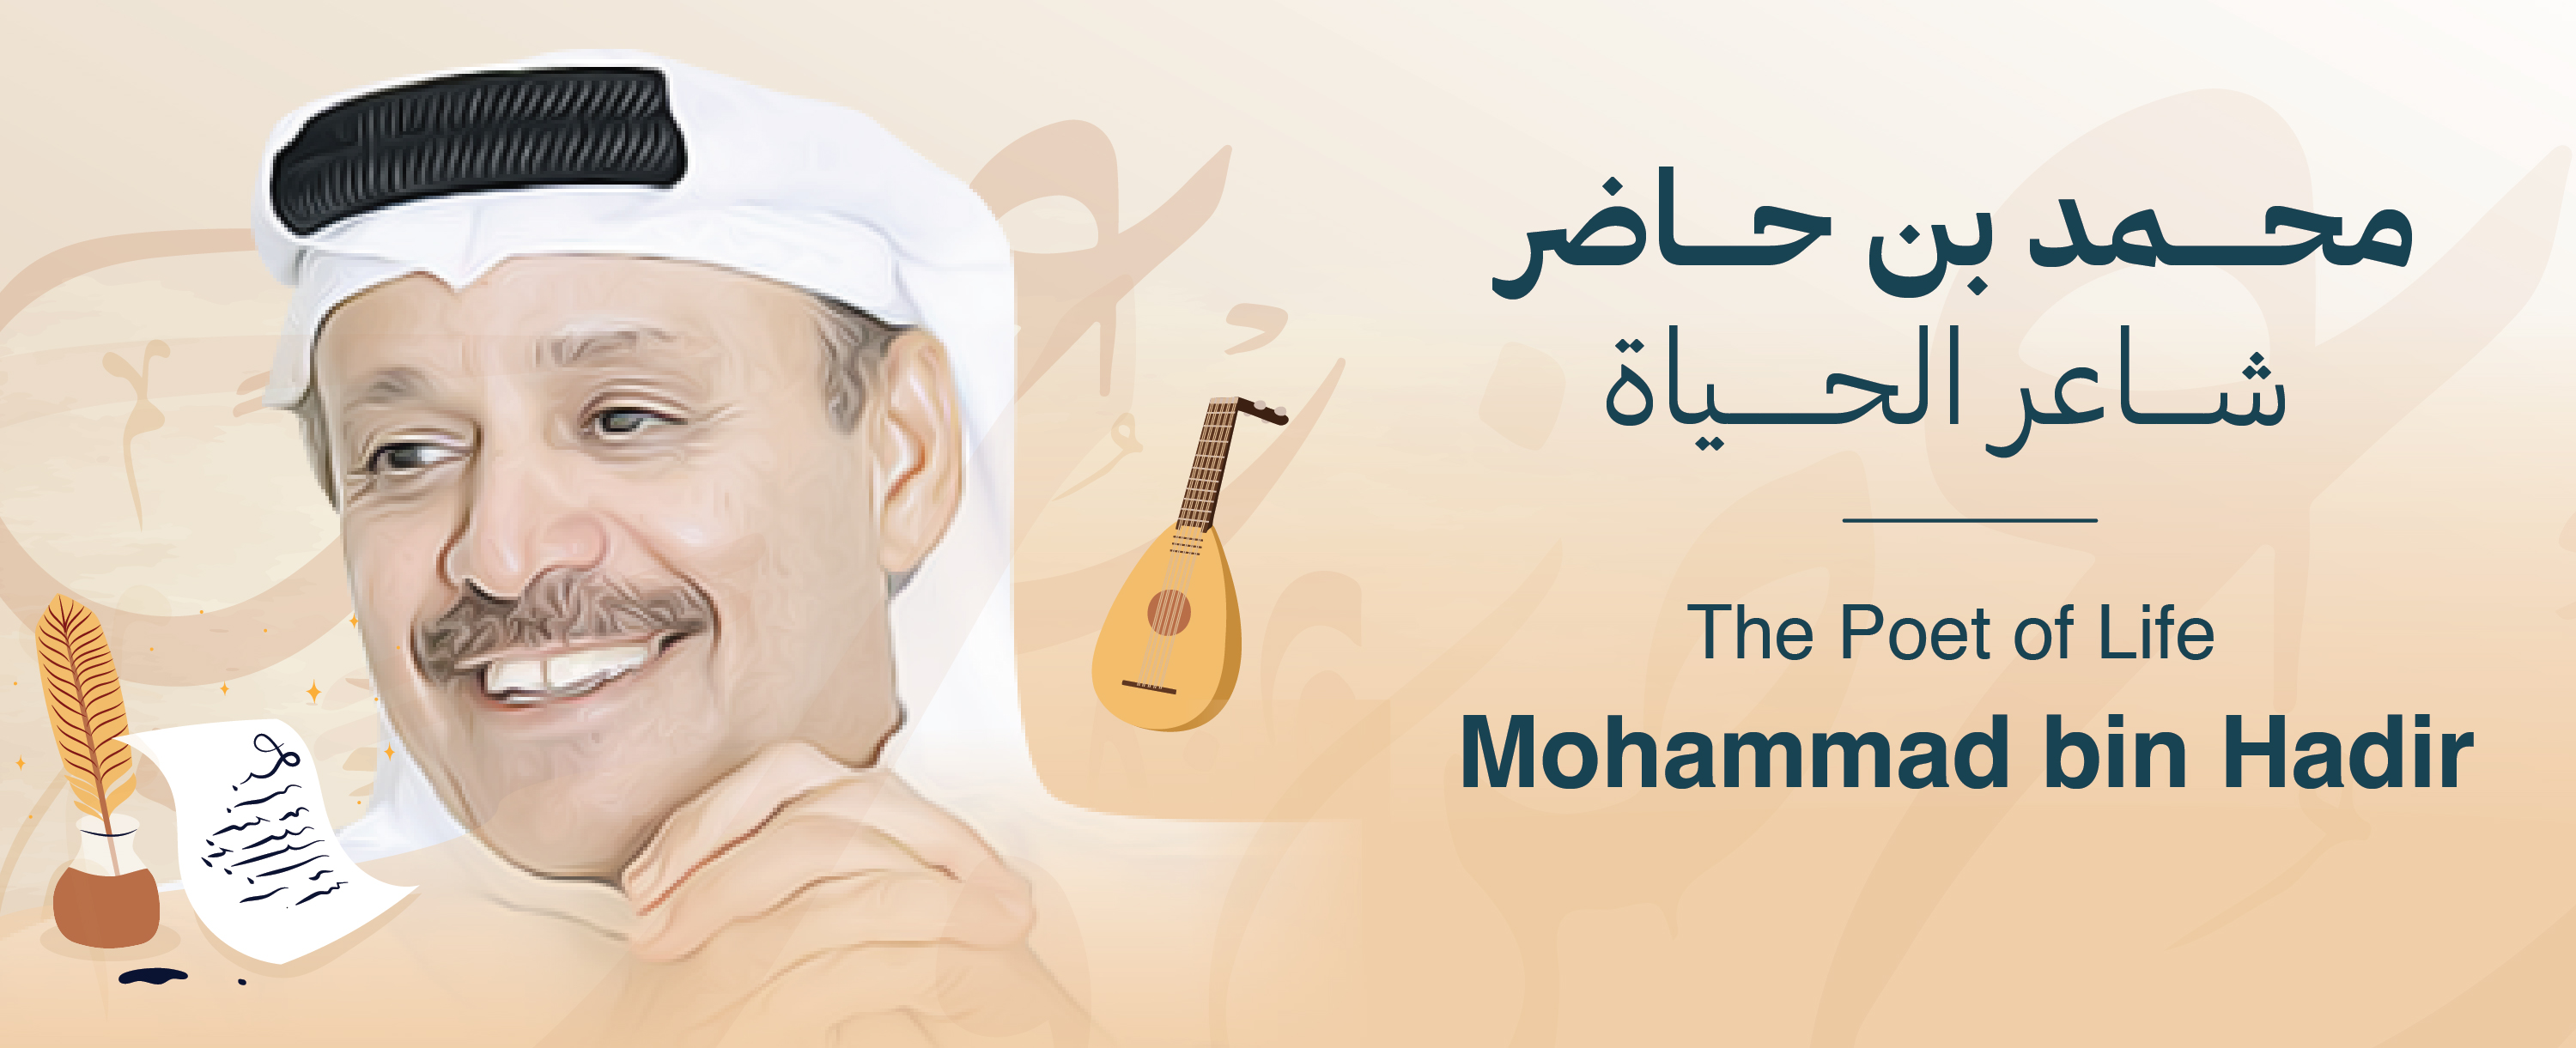 The Poet of Life: Mohammed bin Hadir.